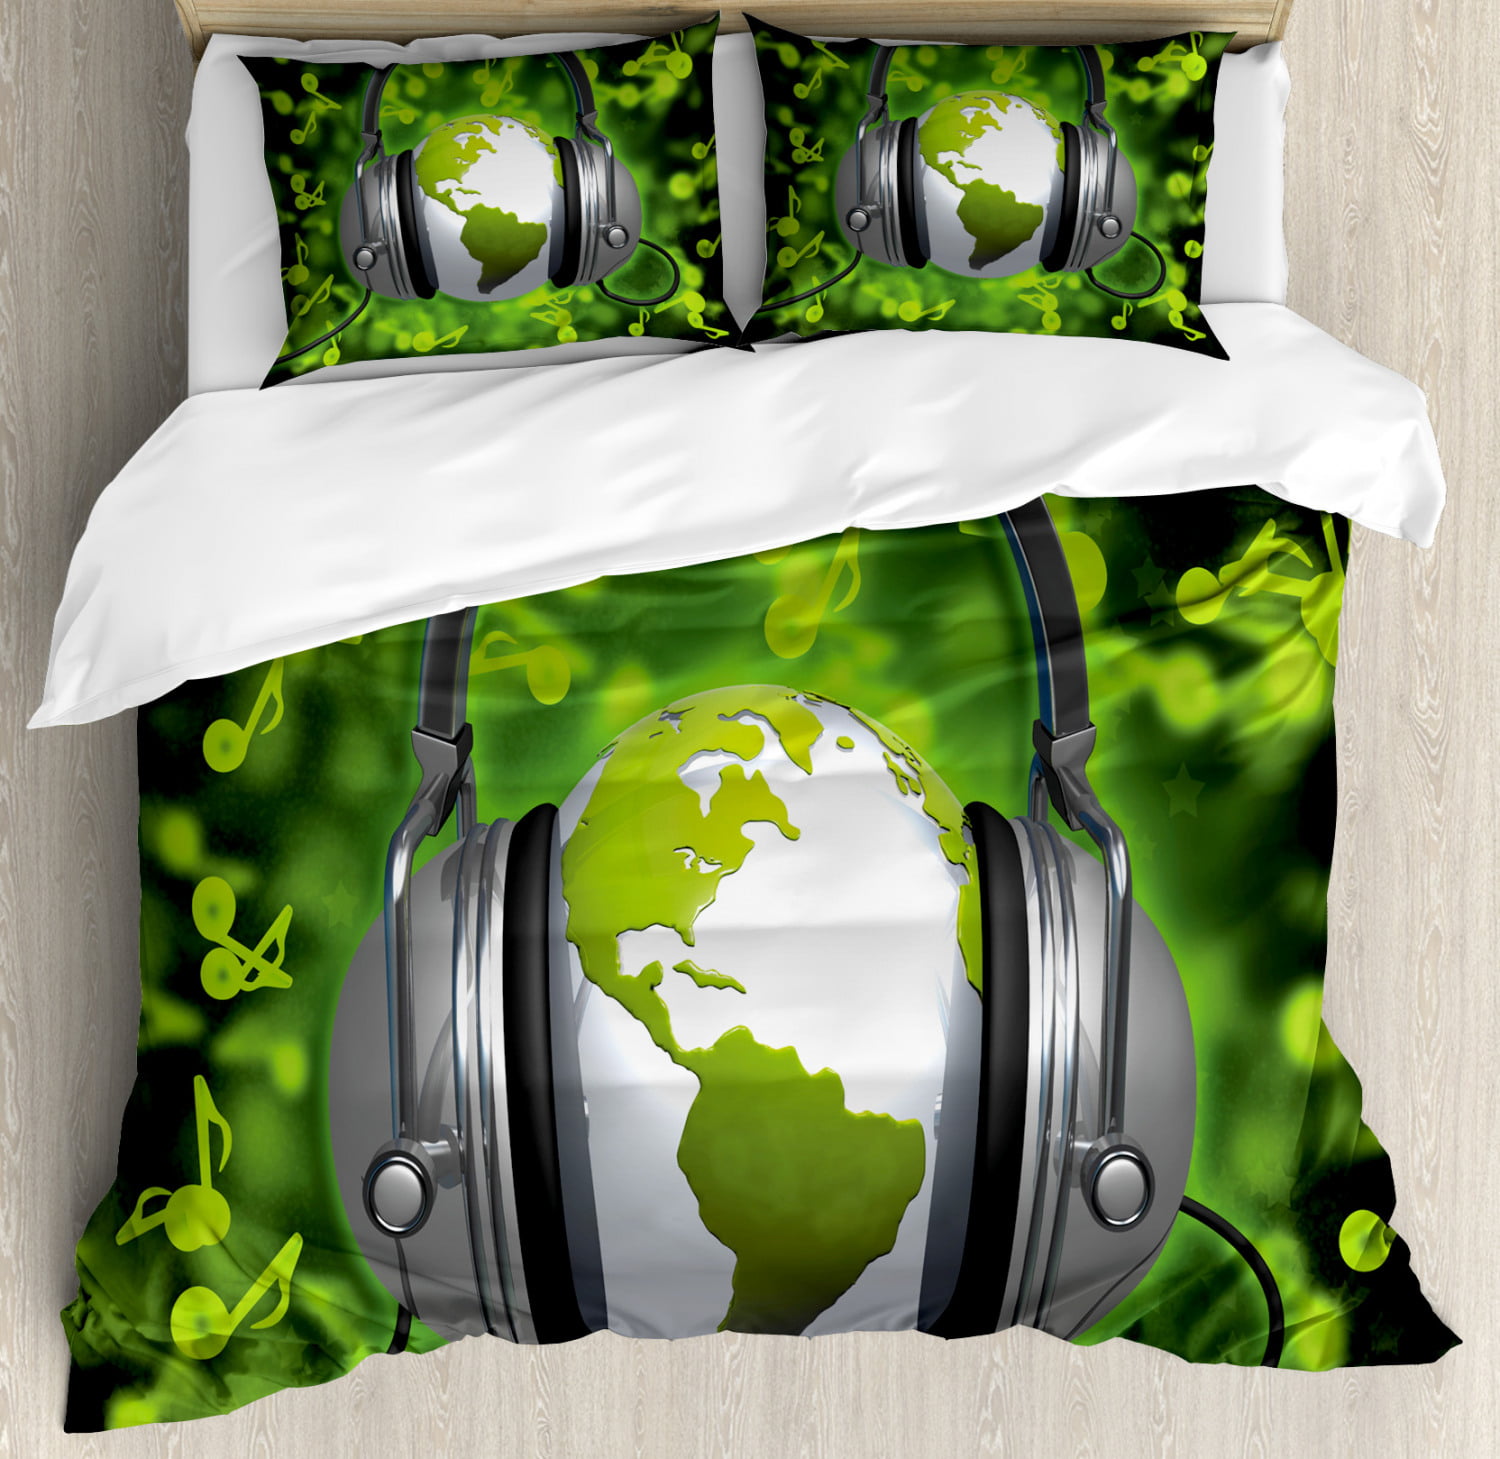 Details about   Bedding set 4pcs Silk cotton embroidery duvet cover flat sheet 2 pillow shams 